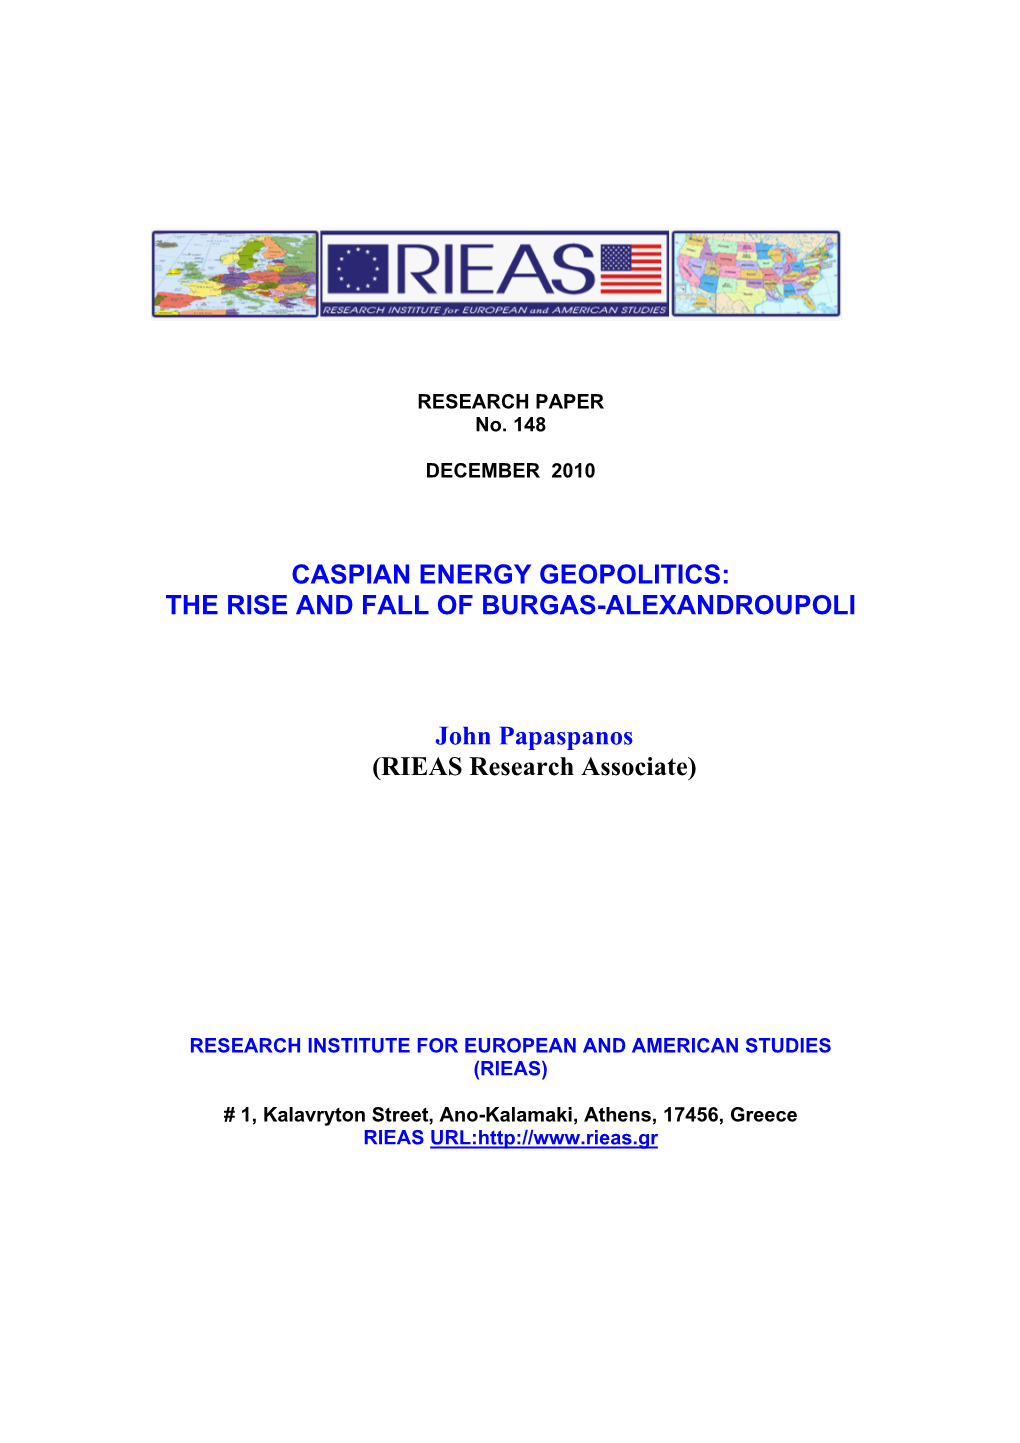 Caspian Energy Geopolitics: the Rise and Fall of Burgas-Alexandroupoli